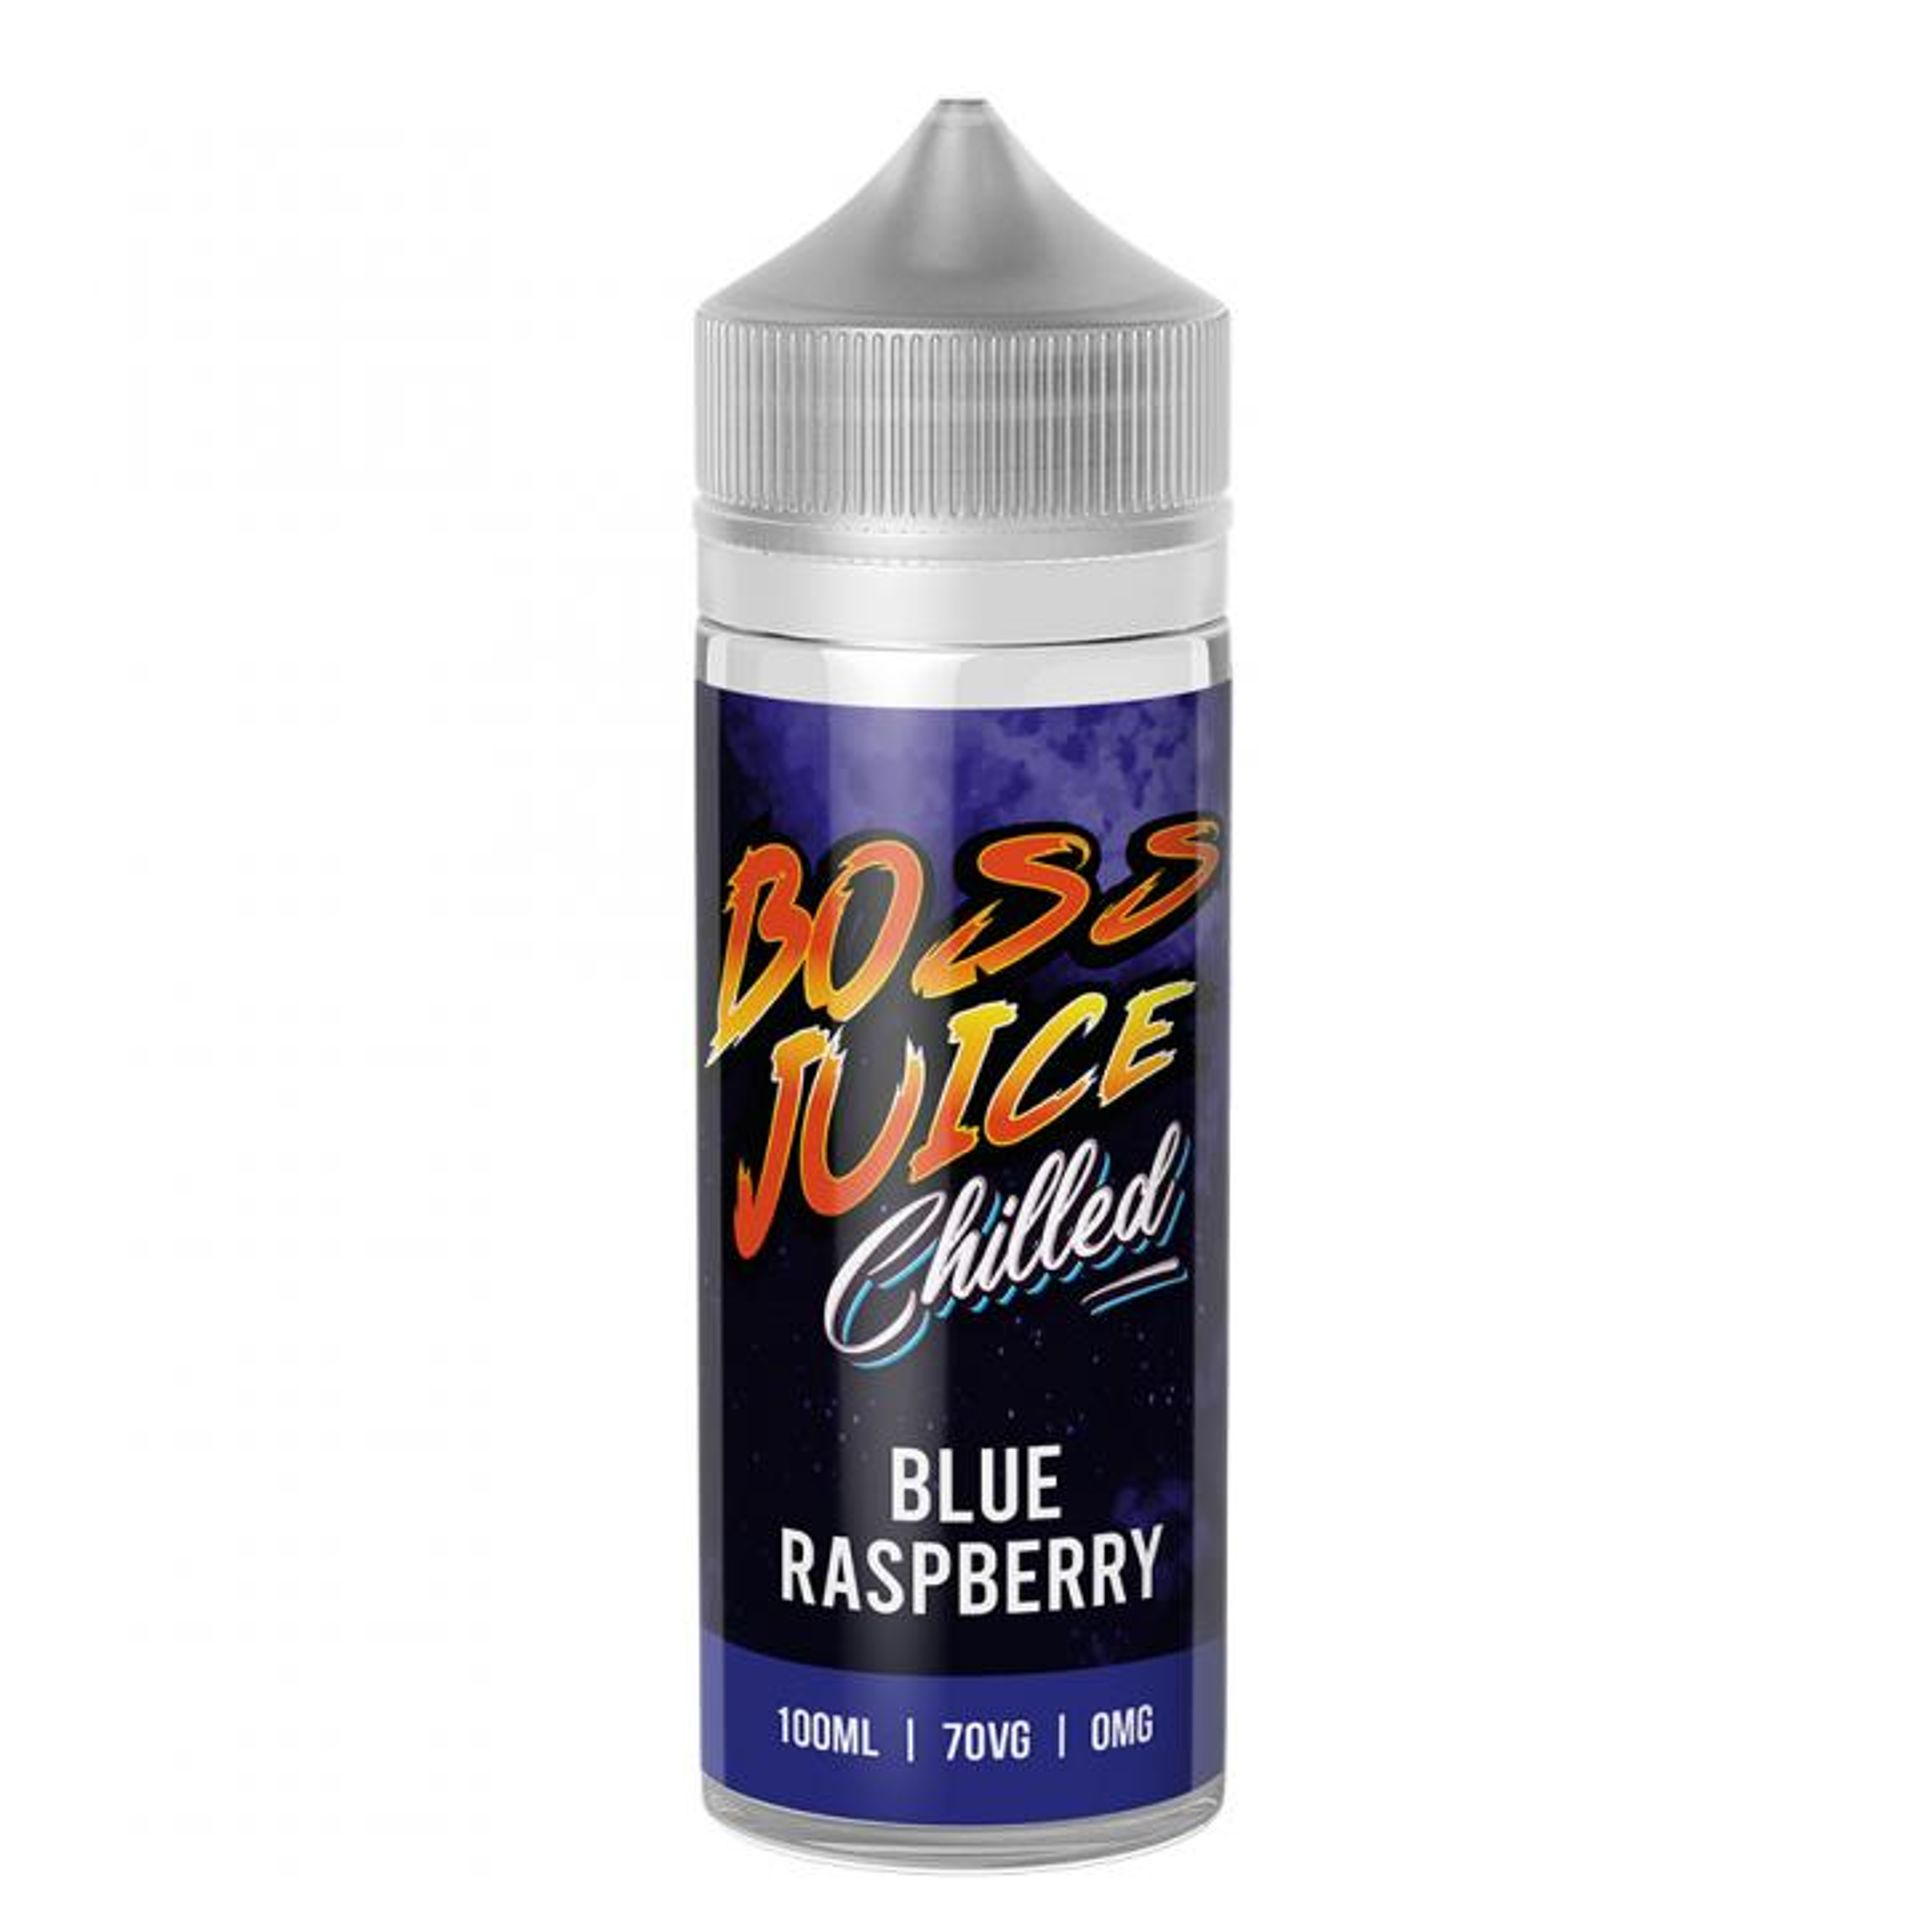 Image of Blue Raspberry by Boss Juice